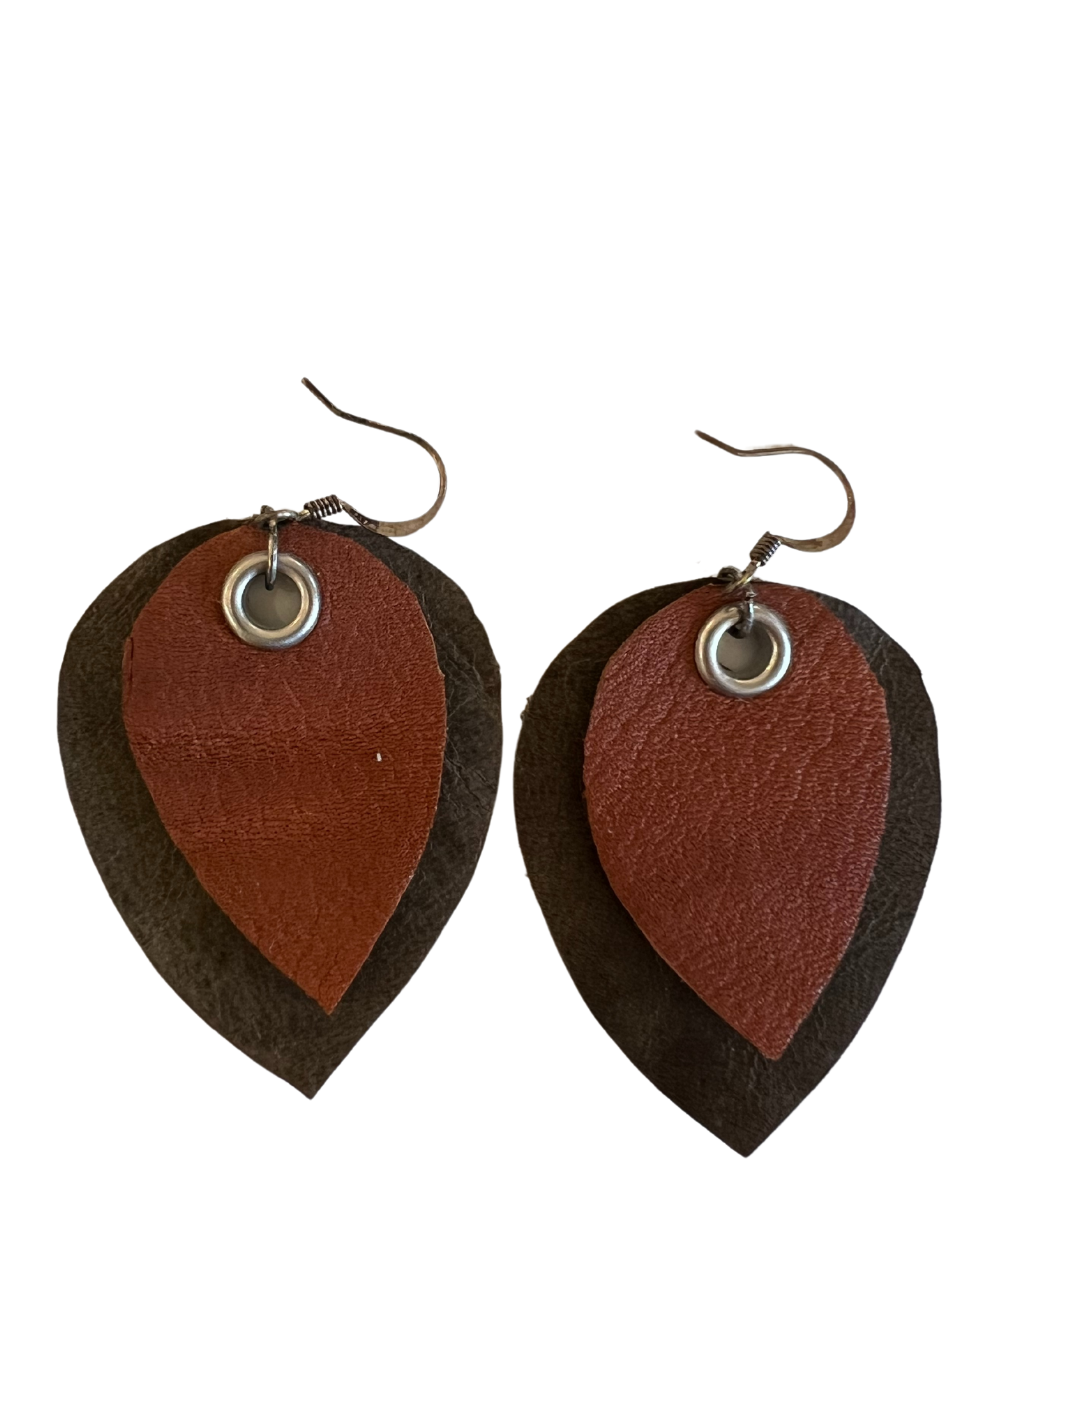 Large Custom Leather Earrings by Lenehan Studios